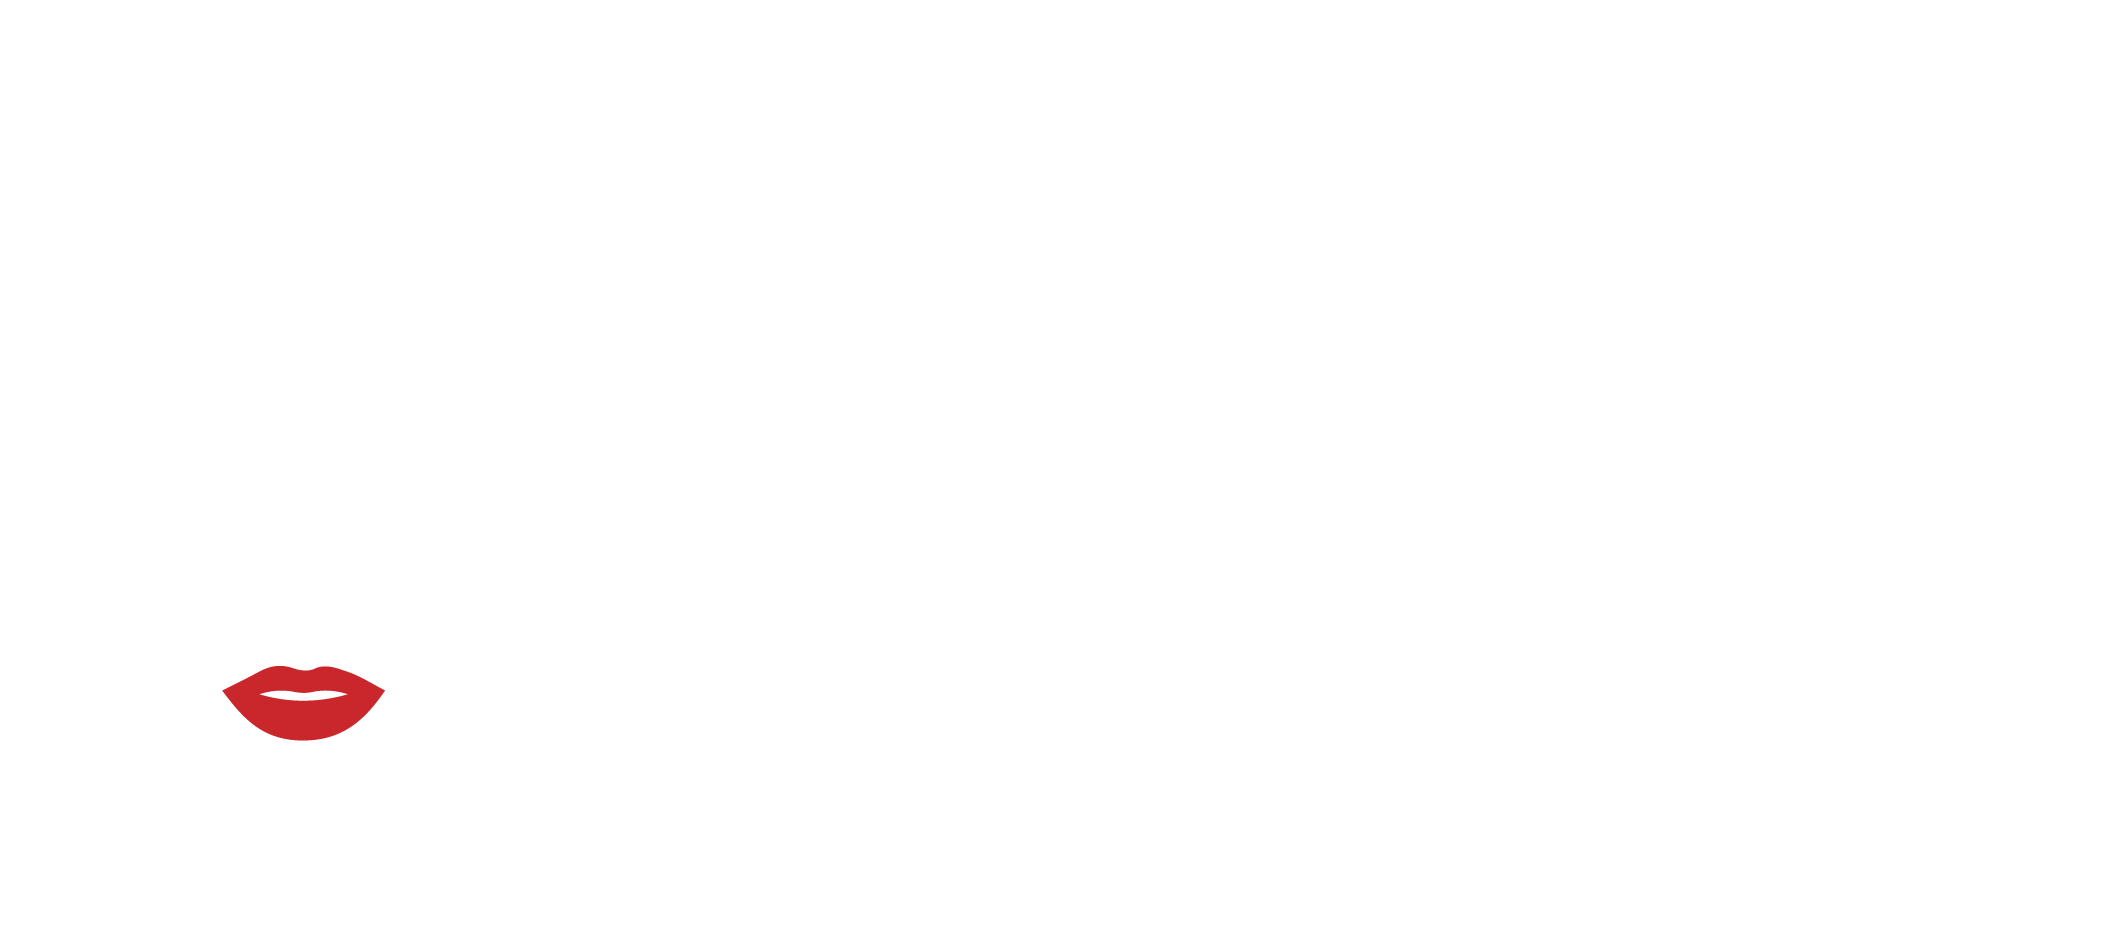 https://www.artigianidellabirra.it/